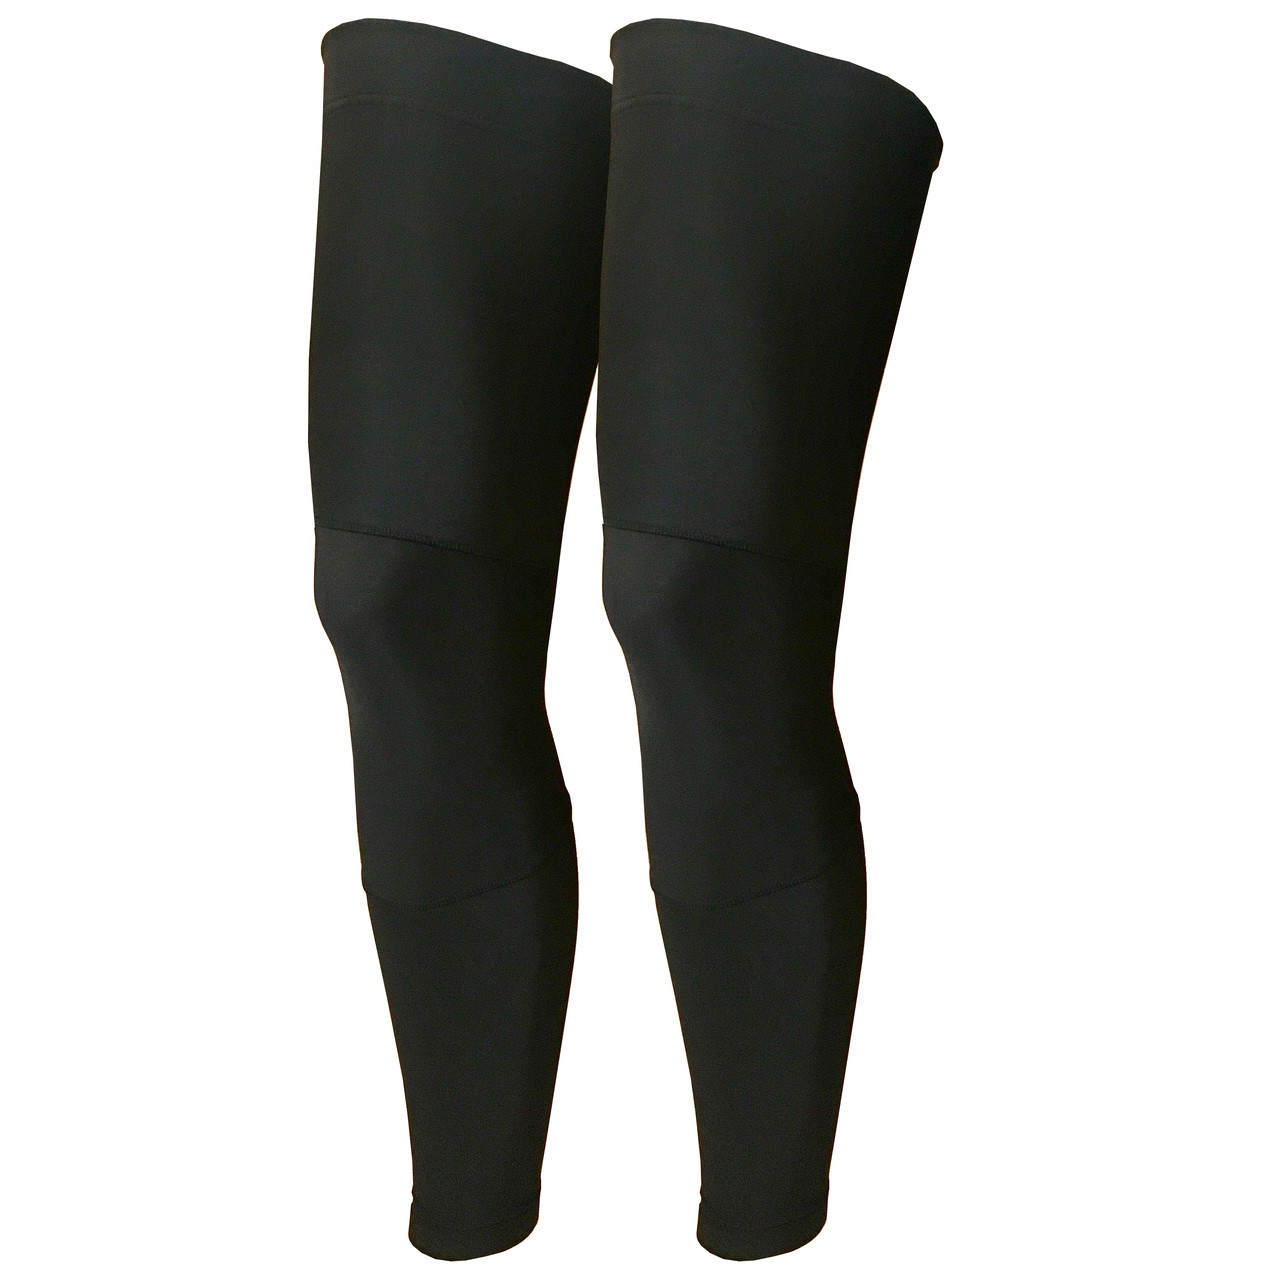 Short Length Black Leg Warmers